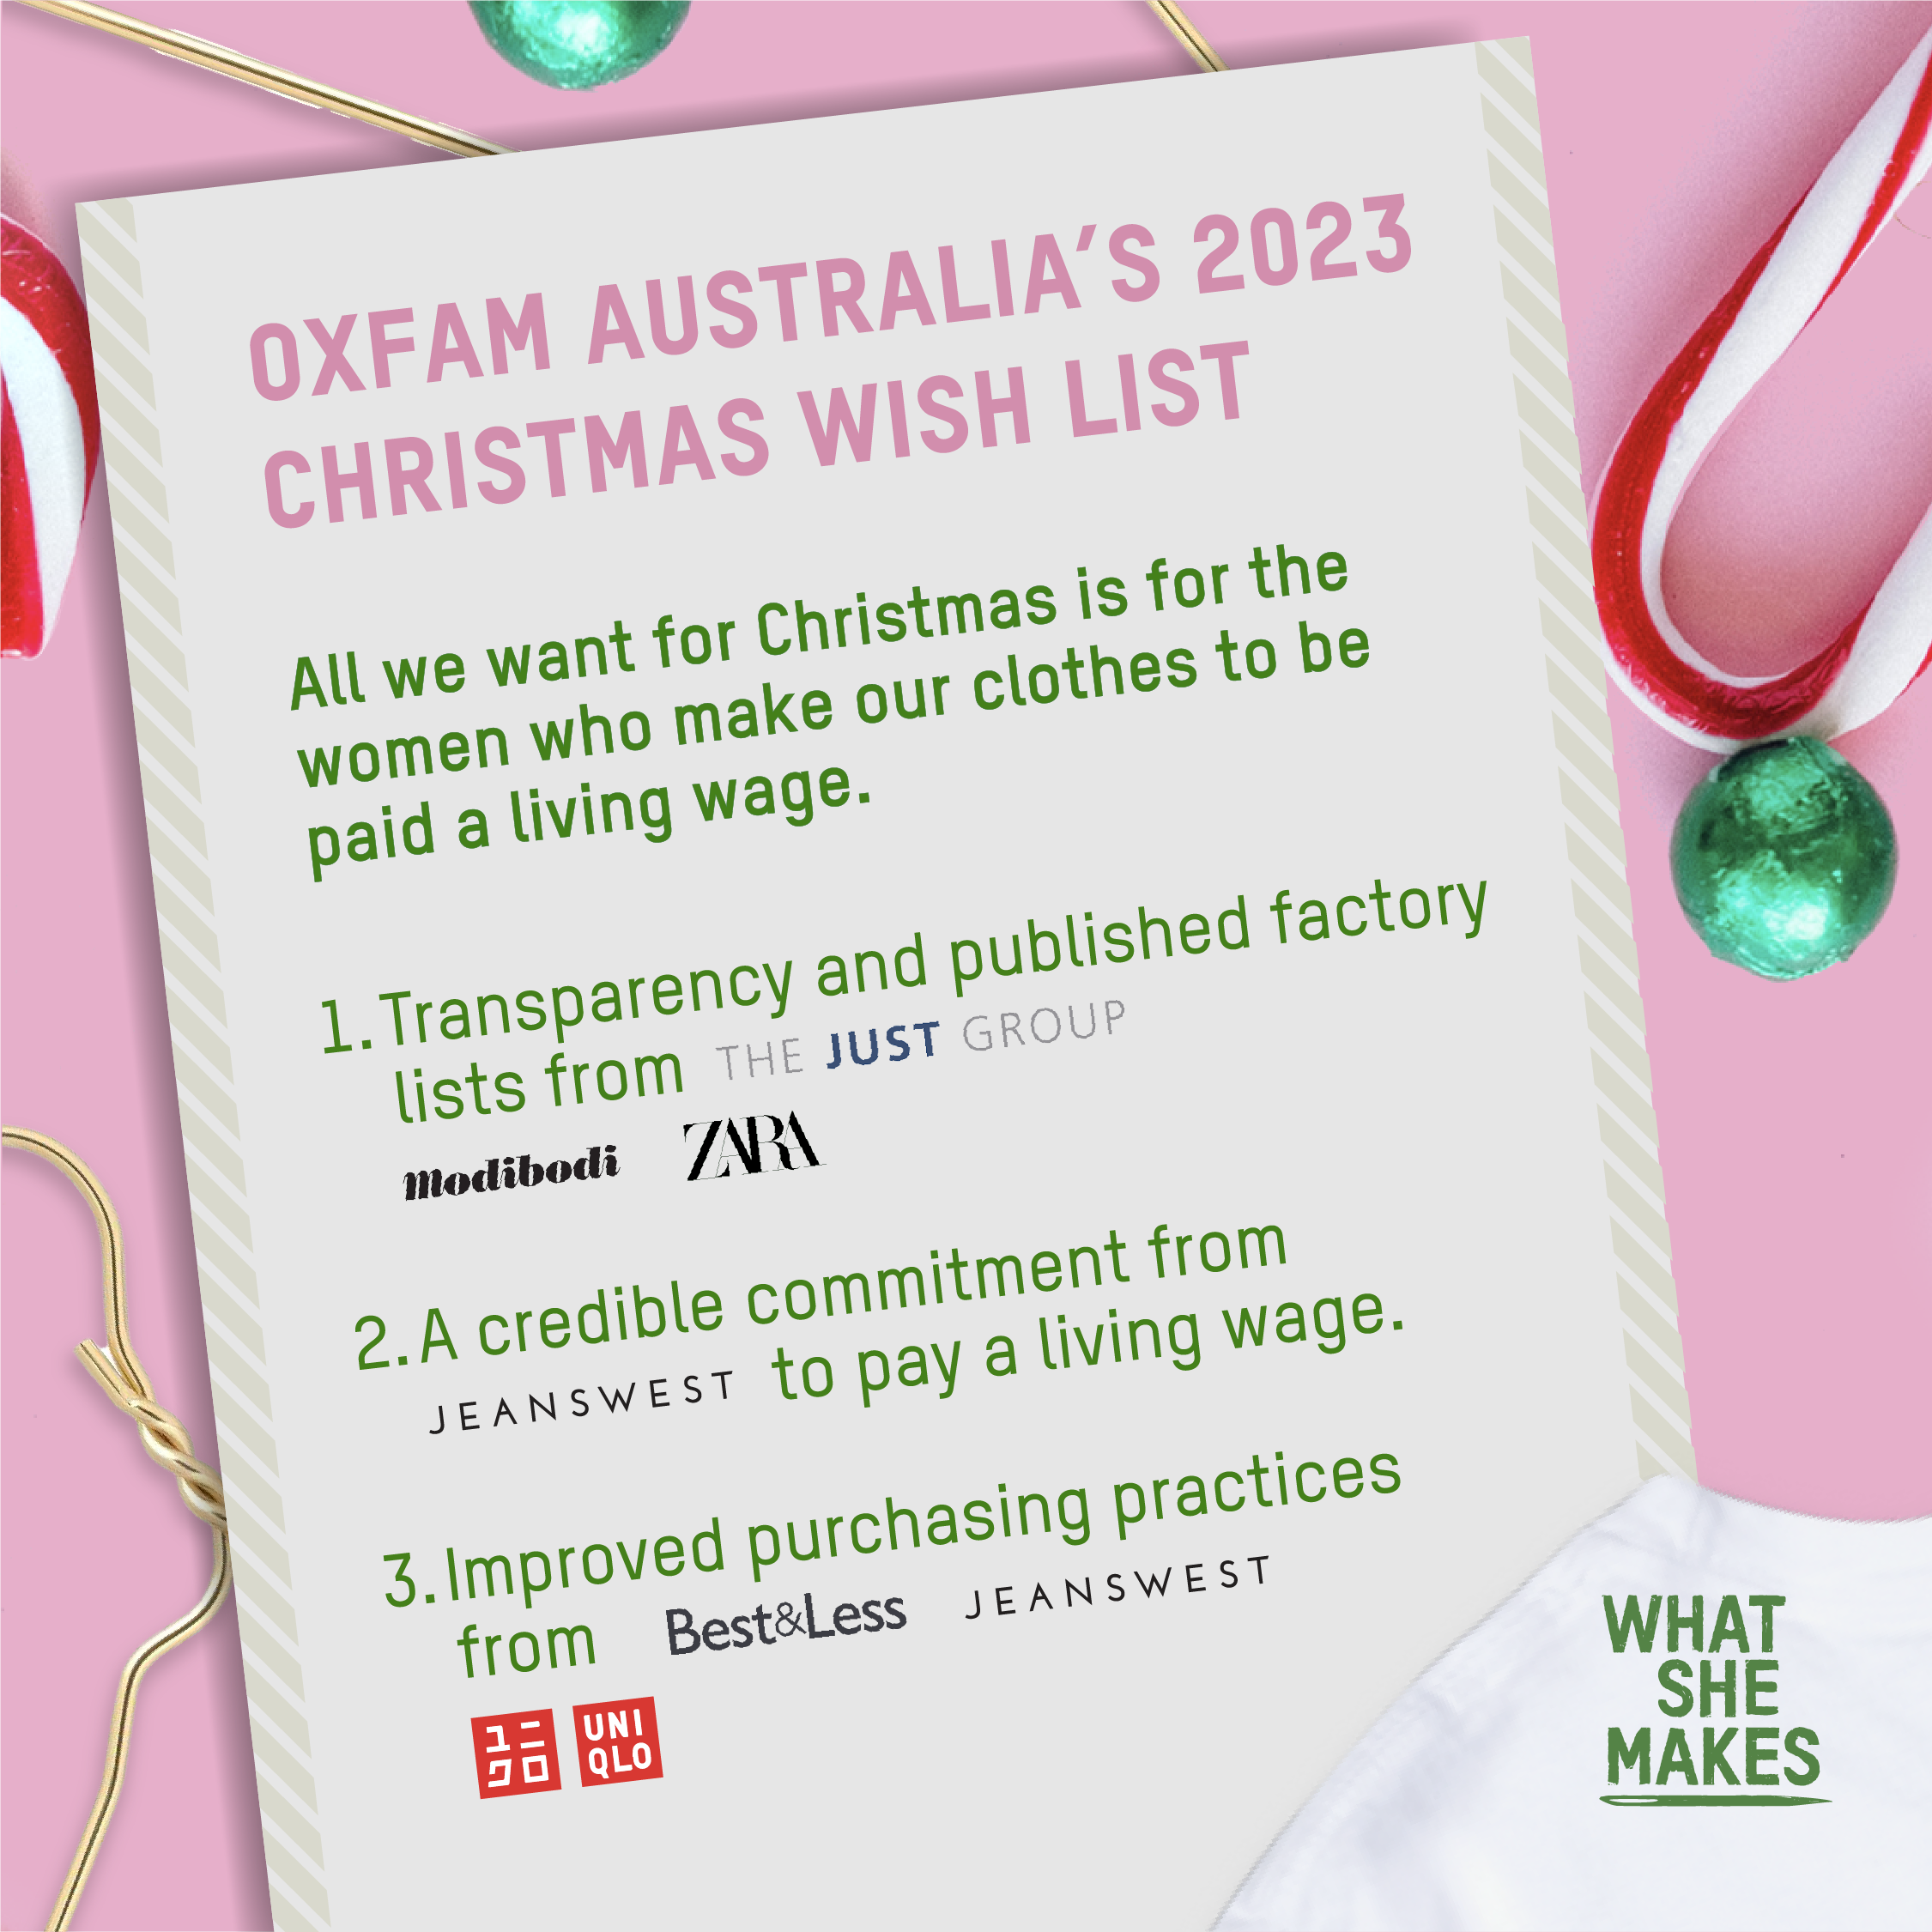 Oxfam Australia's 2023 Christmas Wish List